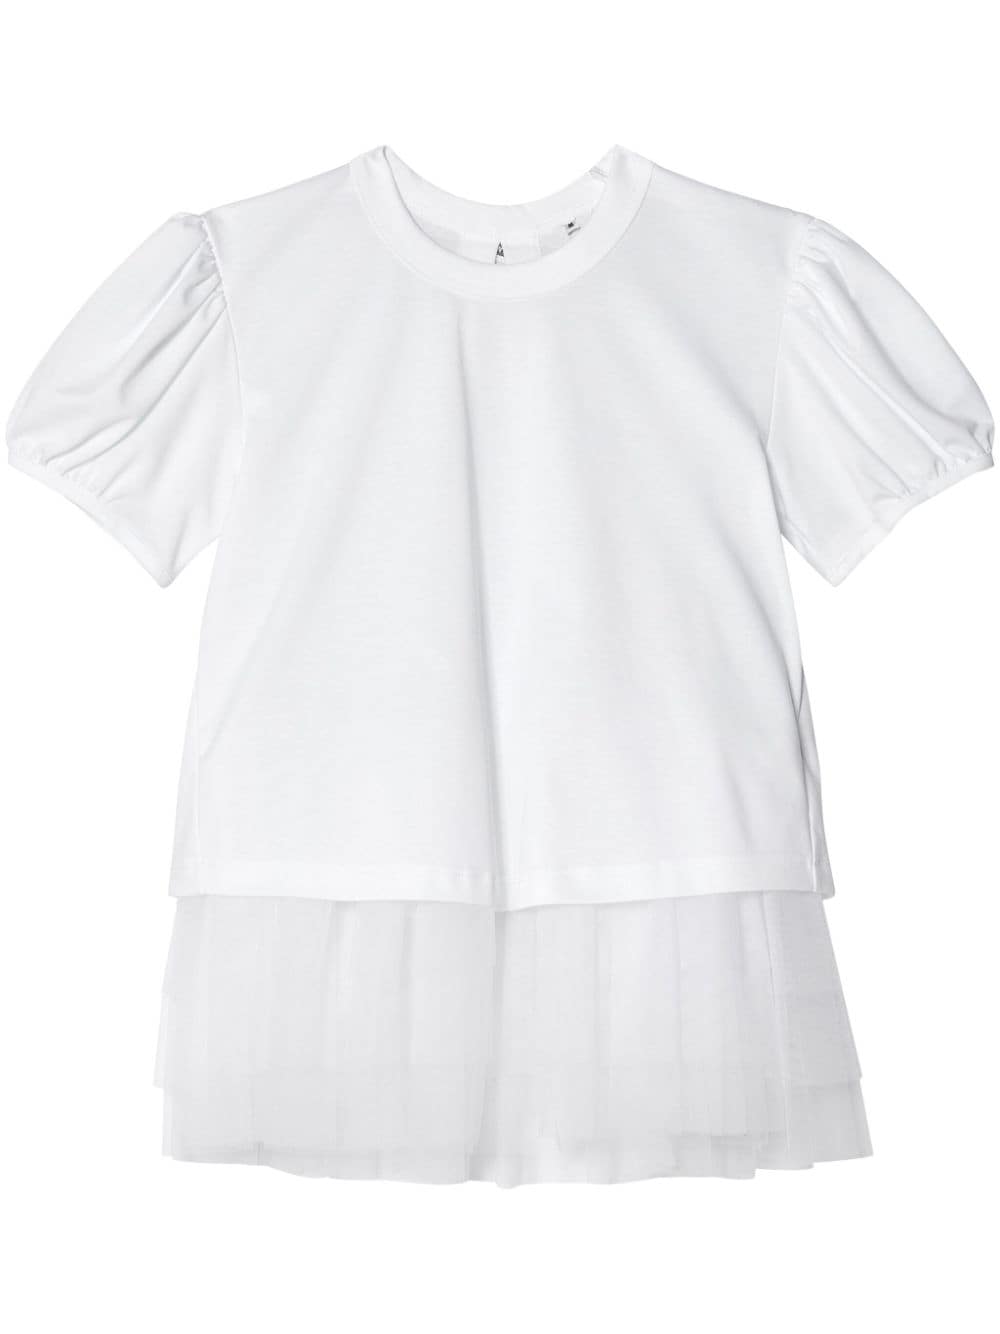 Noir Kei Ninomiya tulle-layer cotton T-shirt - White von Noir Kei Ninomiya